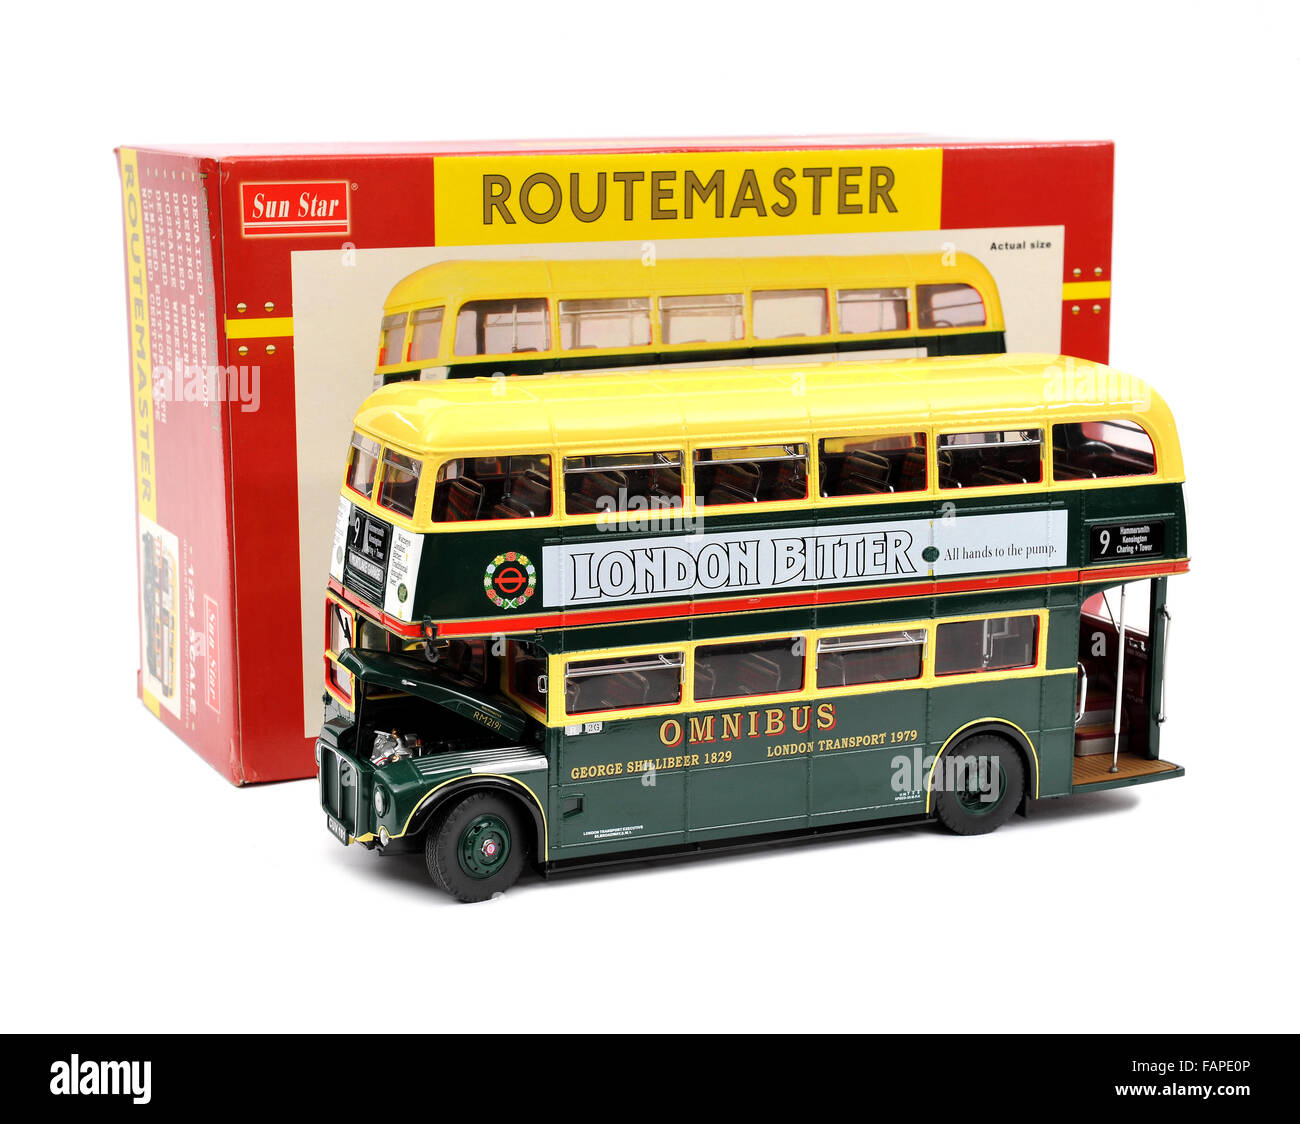 Sun Star London Transport Routemaster double decker bus 1:24 scale model Stock Photo